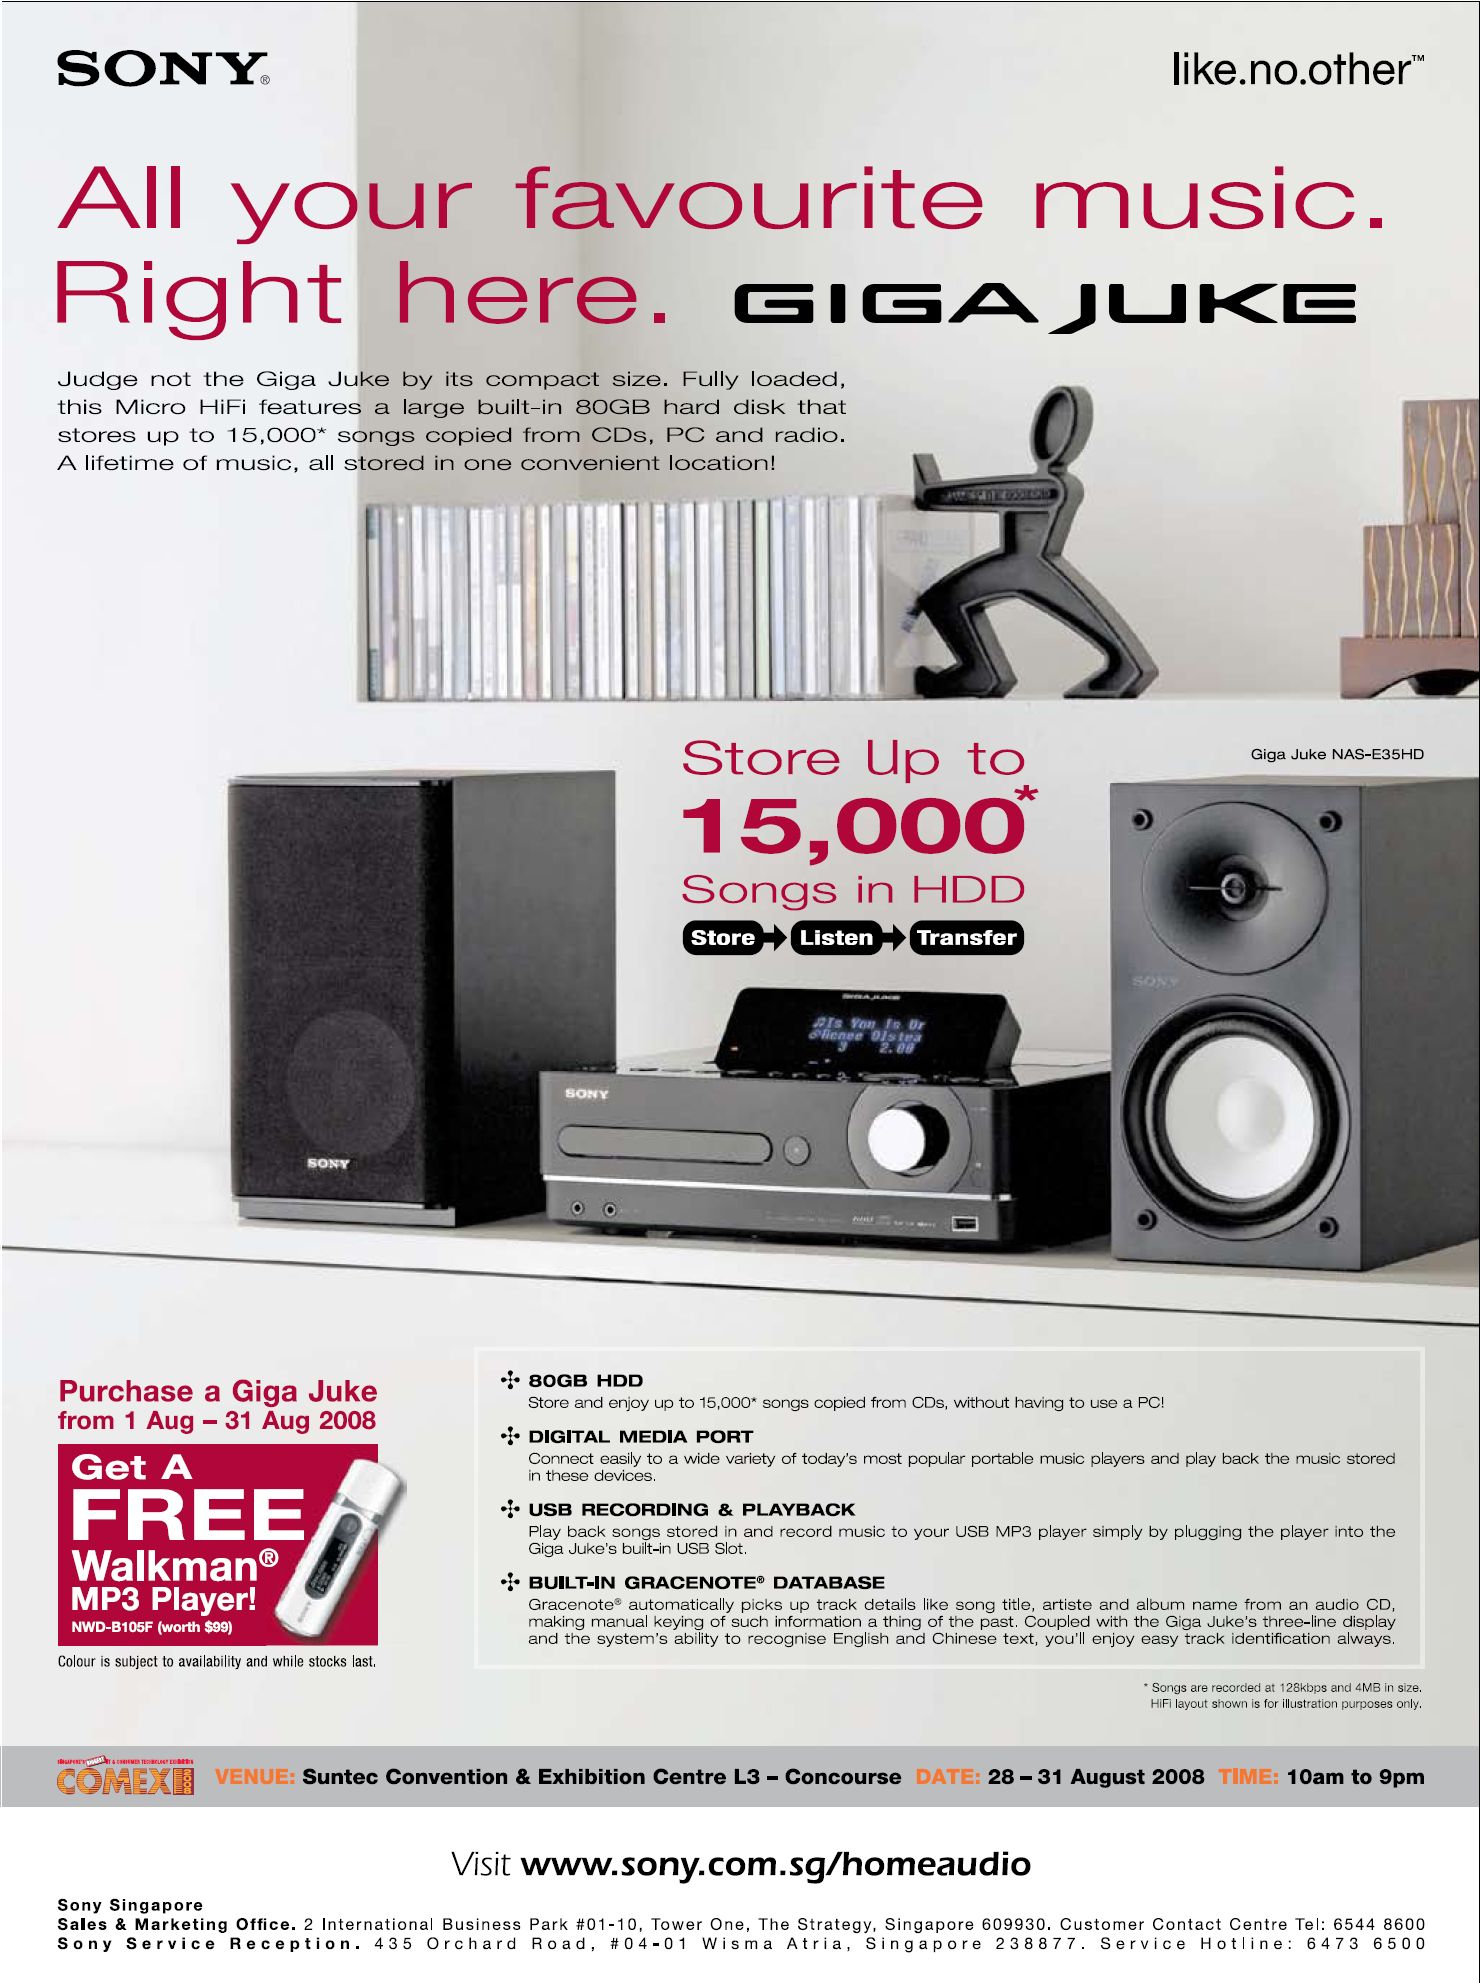 Comex 2008 price list image brochure of Sony Giga Juke